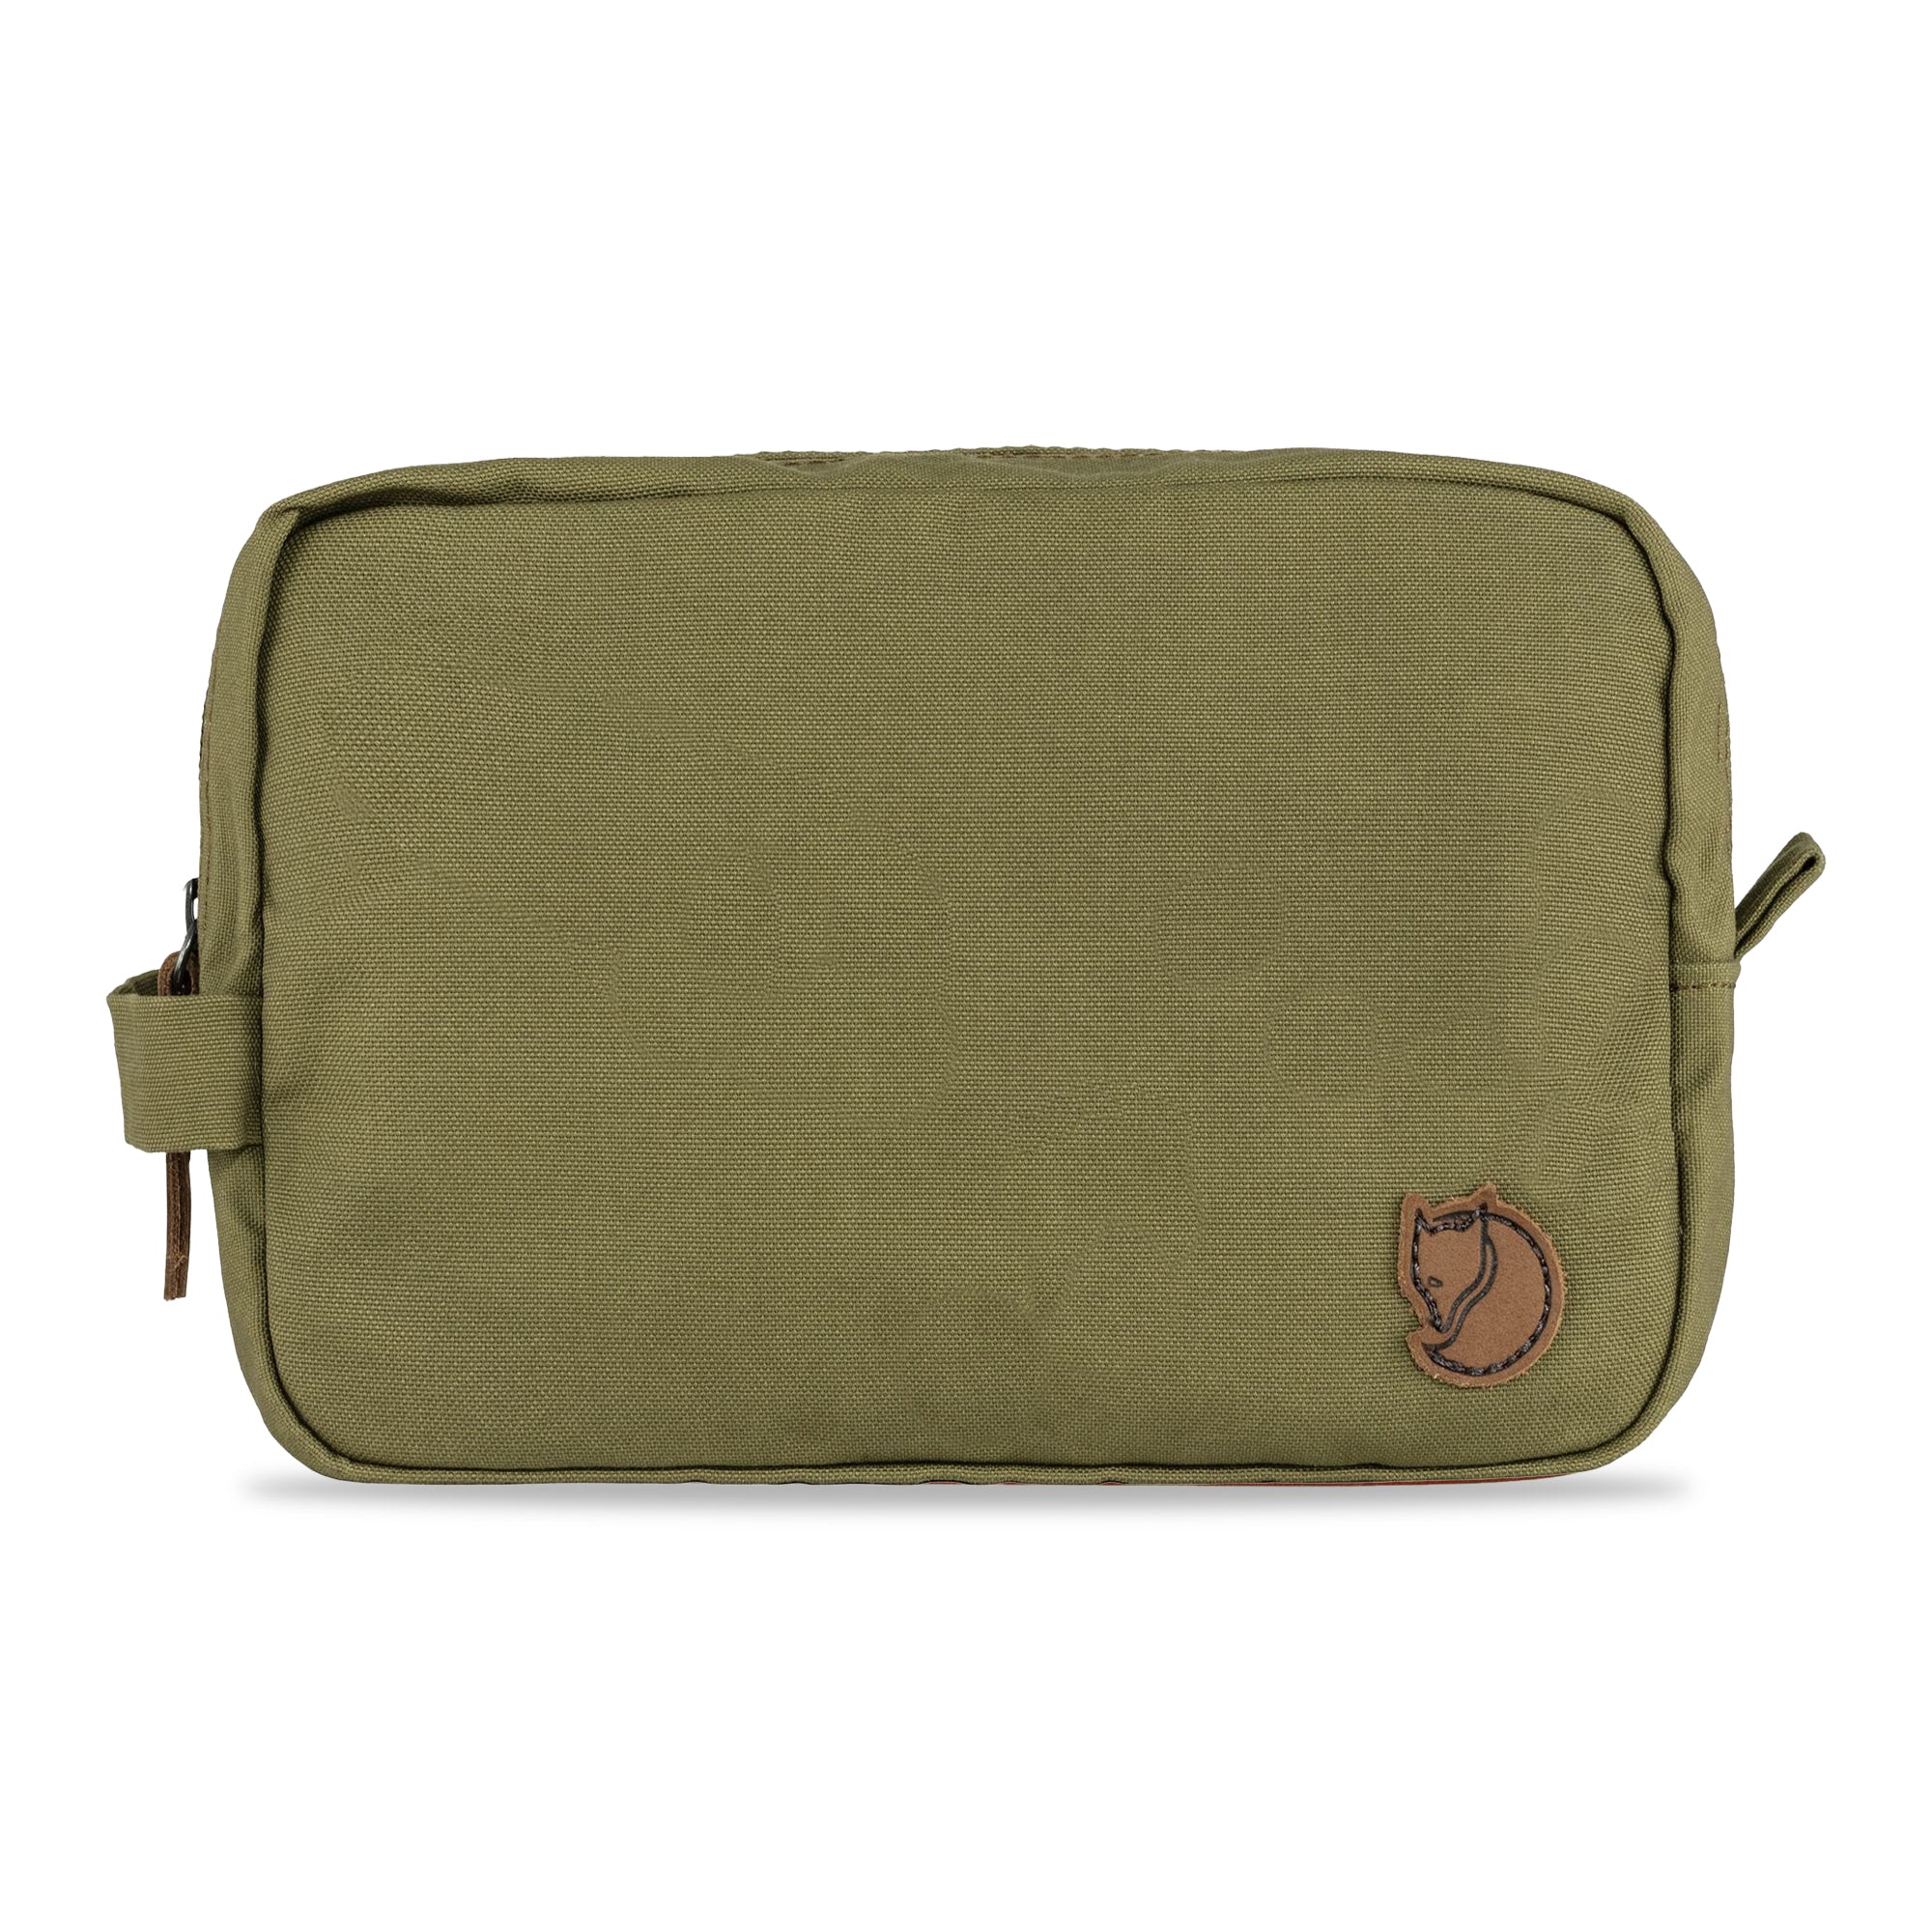 Fjallraven Gear Bag - Foliage Green